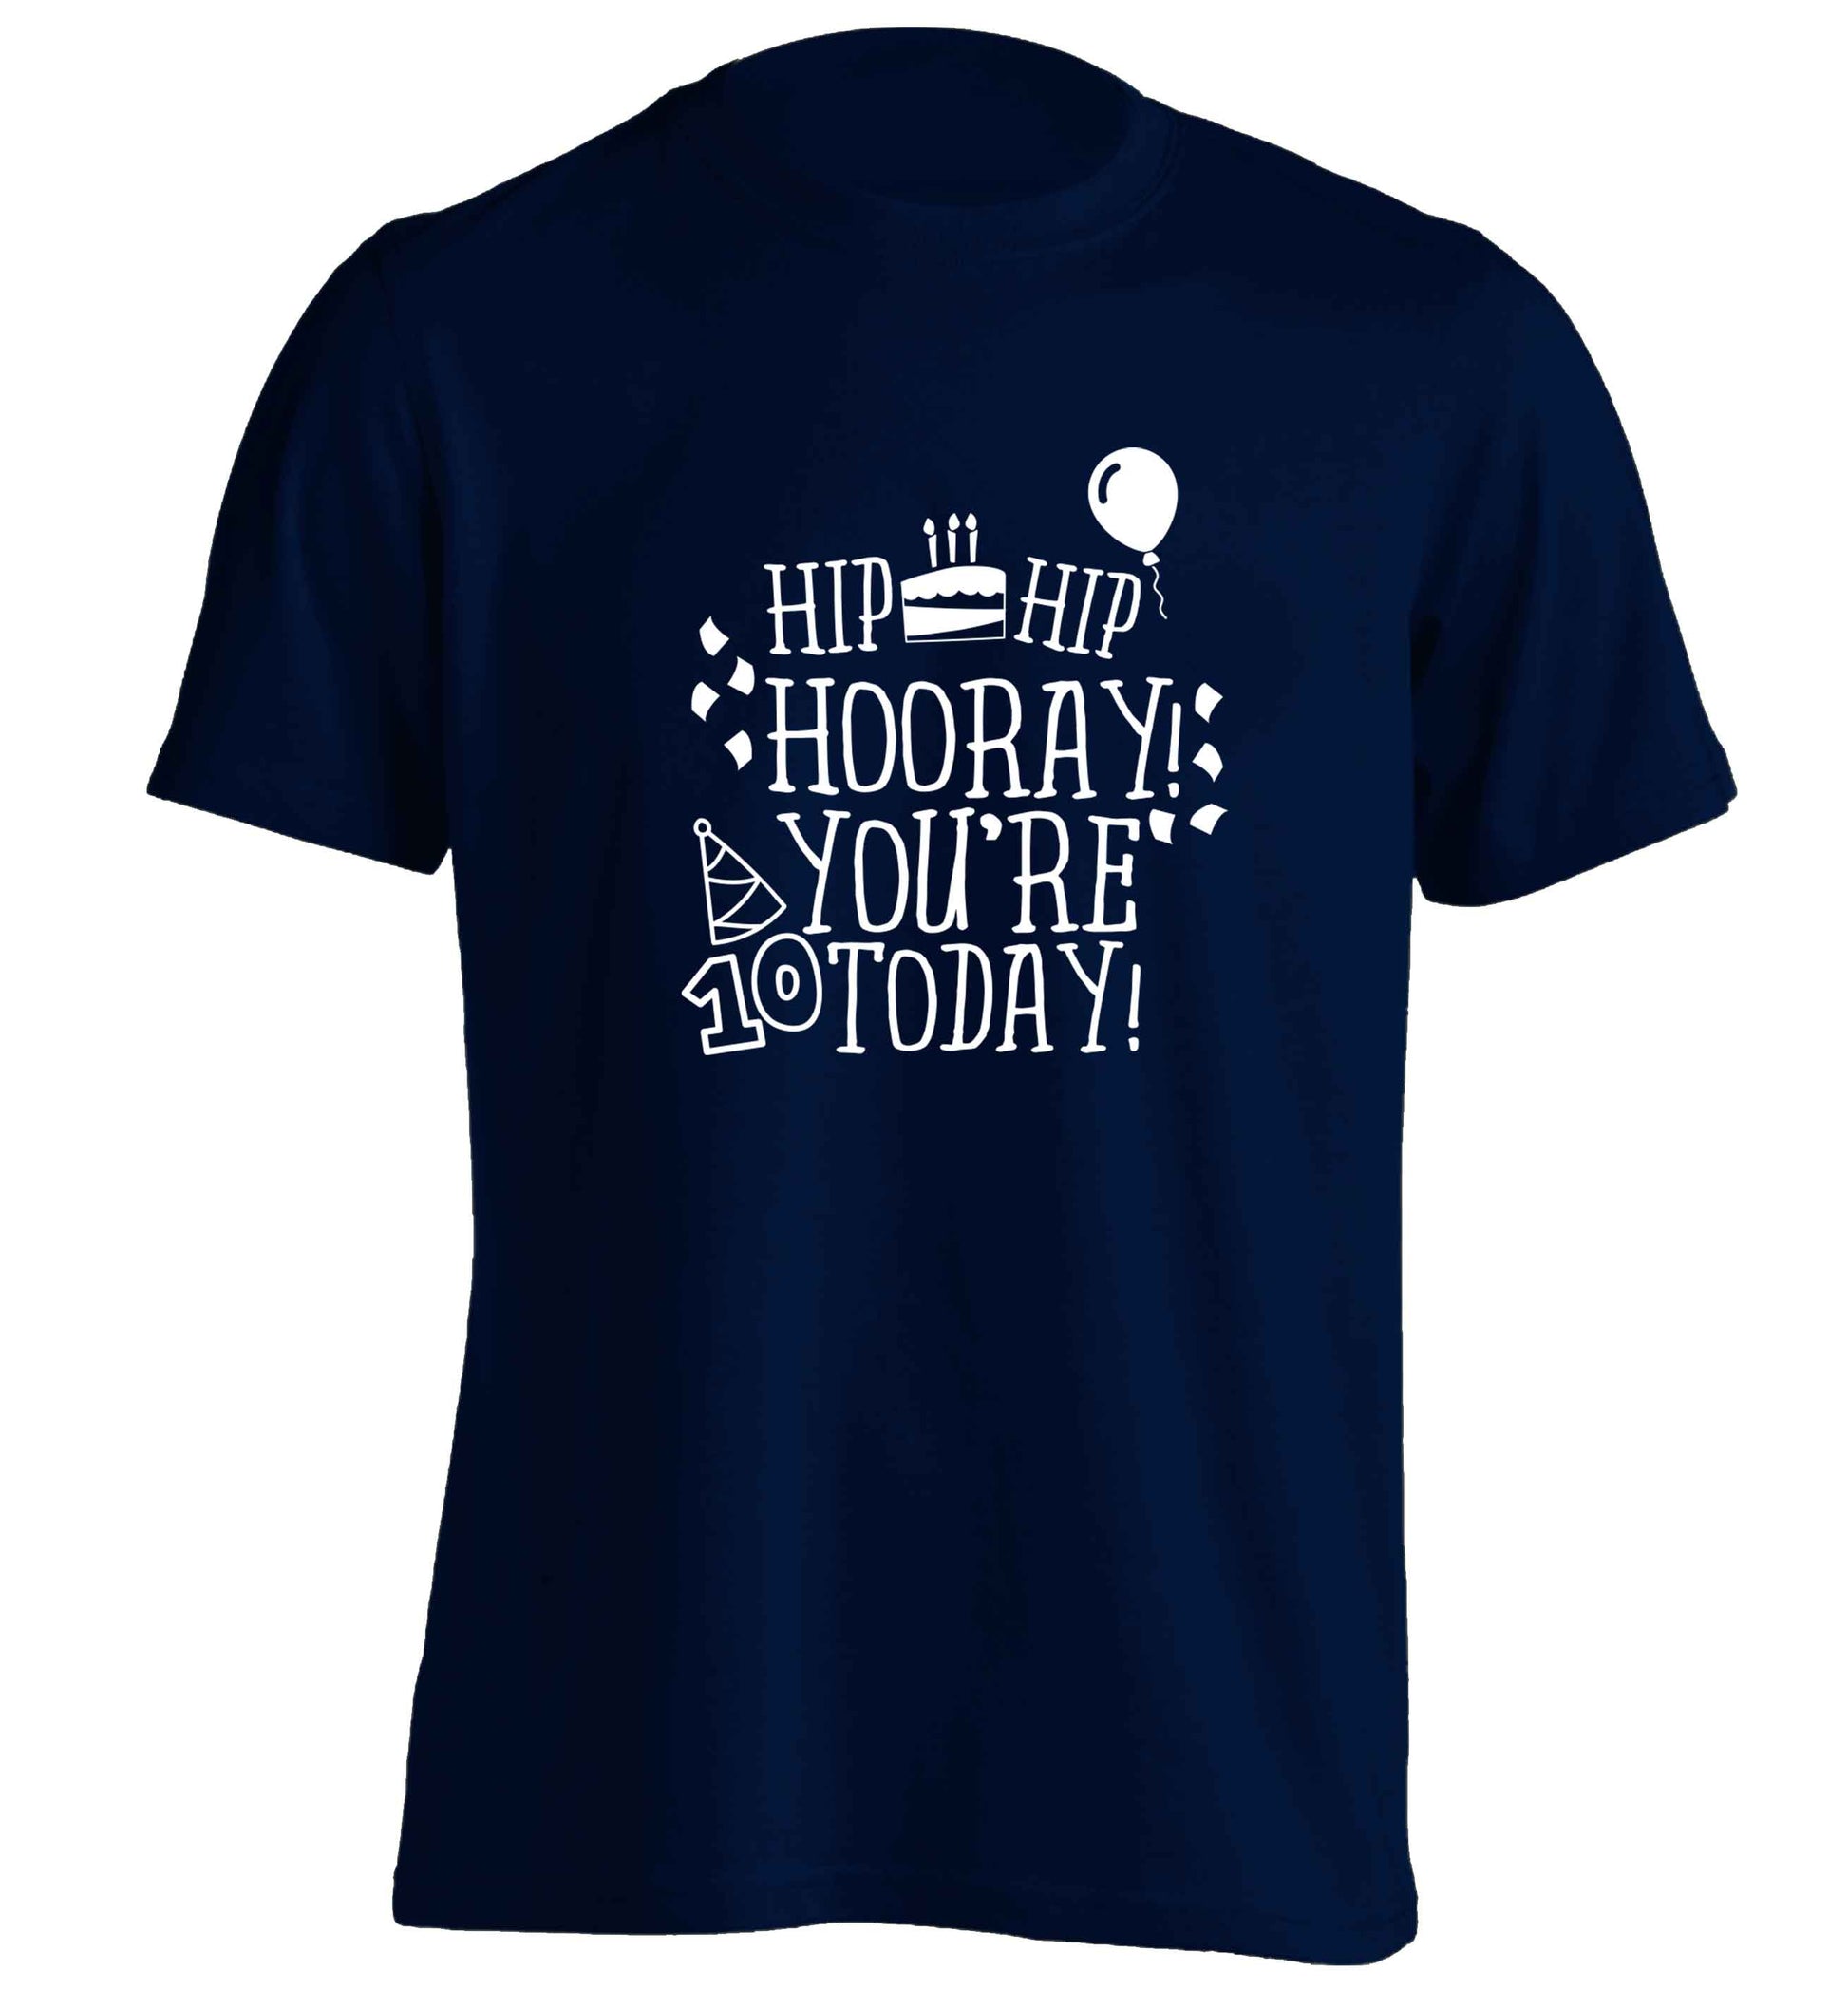 Hip hip hooray you're ten today! adults unisex navy Tshirt 2XL